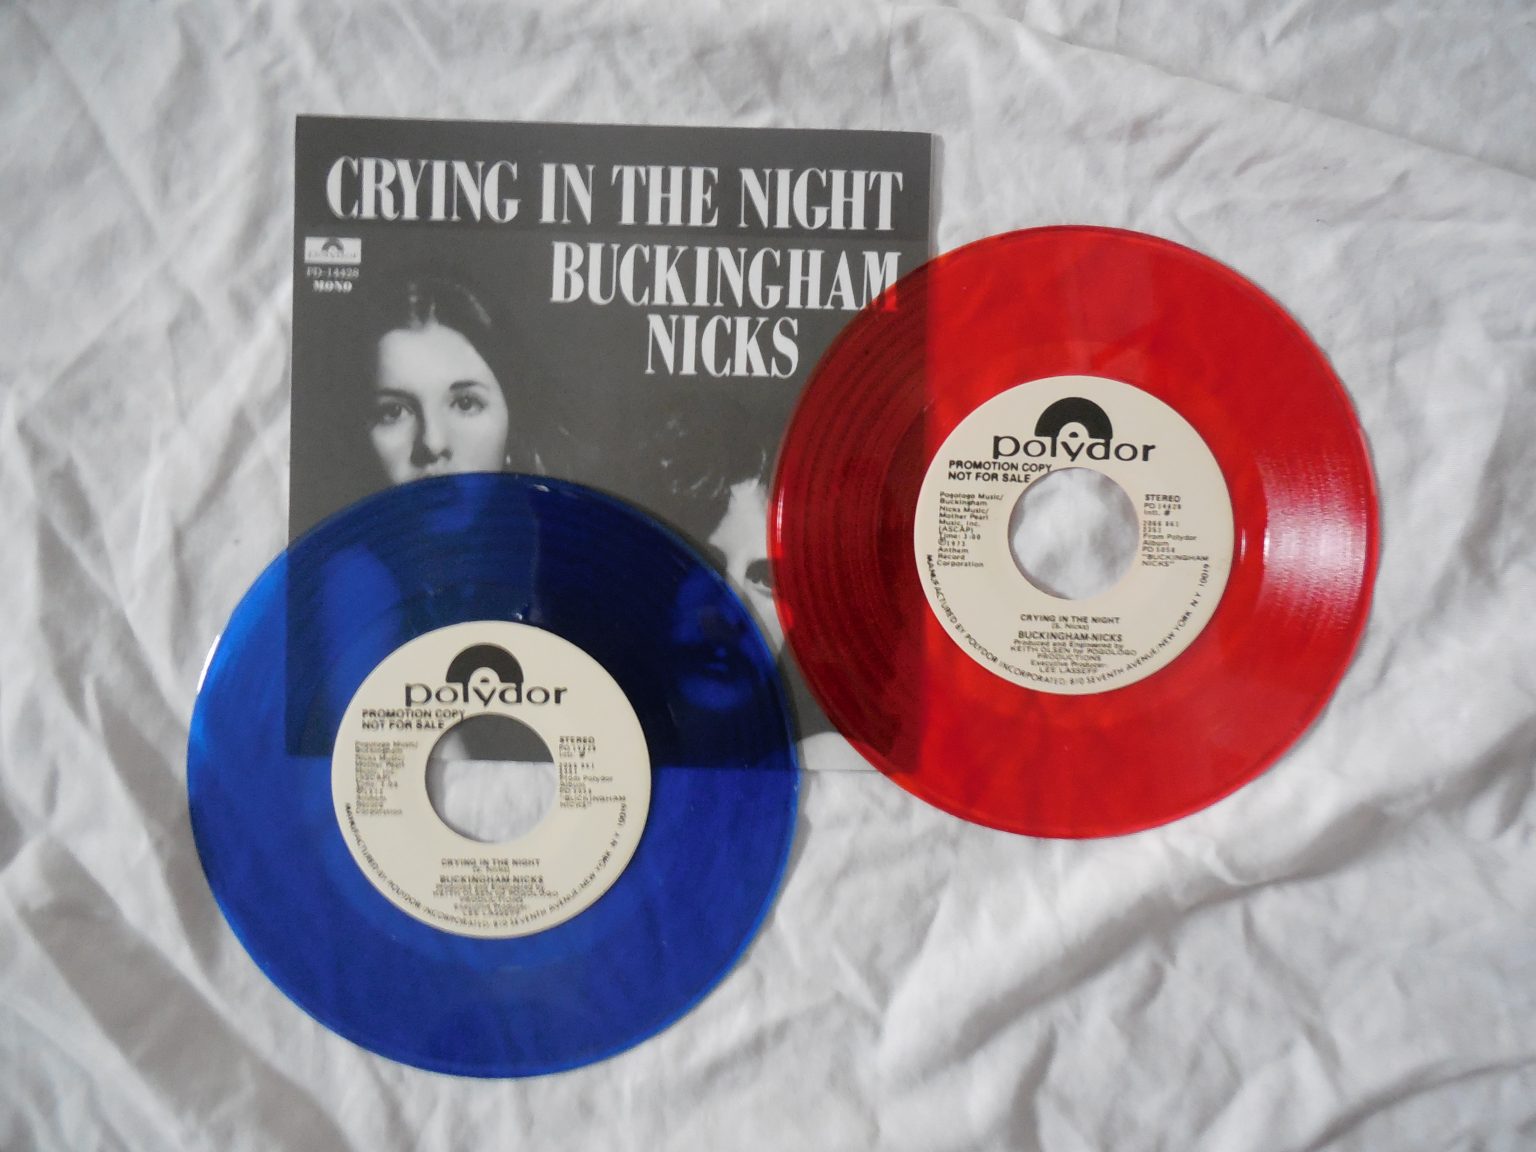 Fleetwood Mac(Buckingham-Nicks) Crying In The Night – Very English and ...